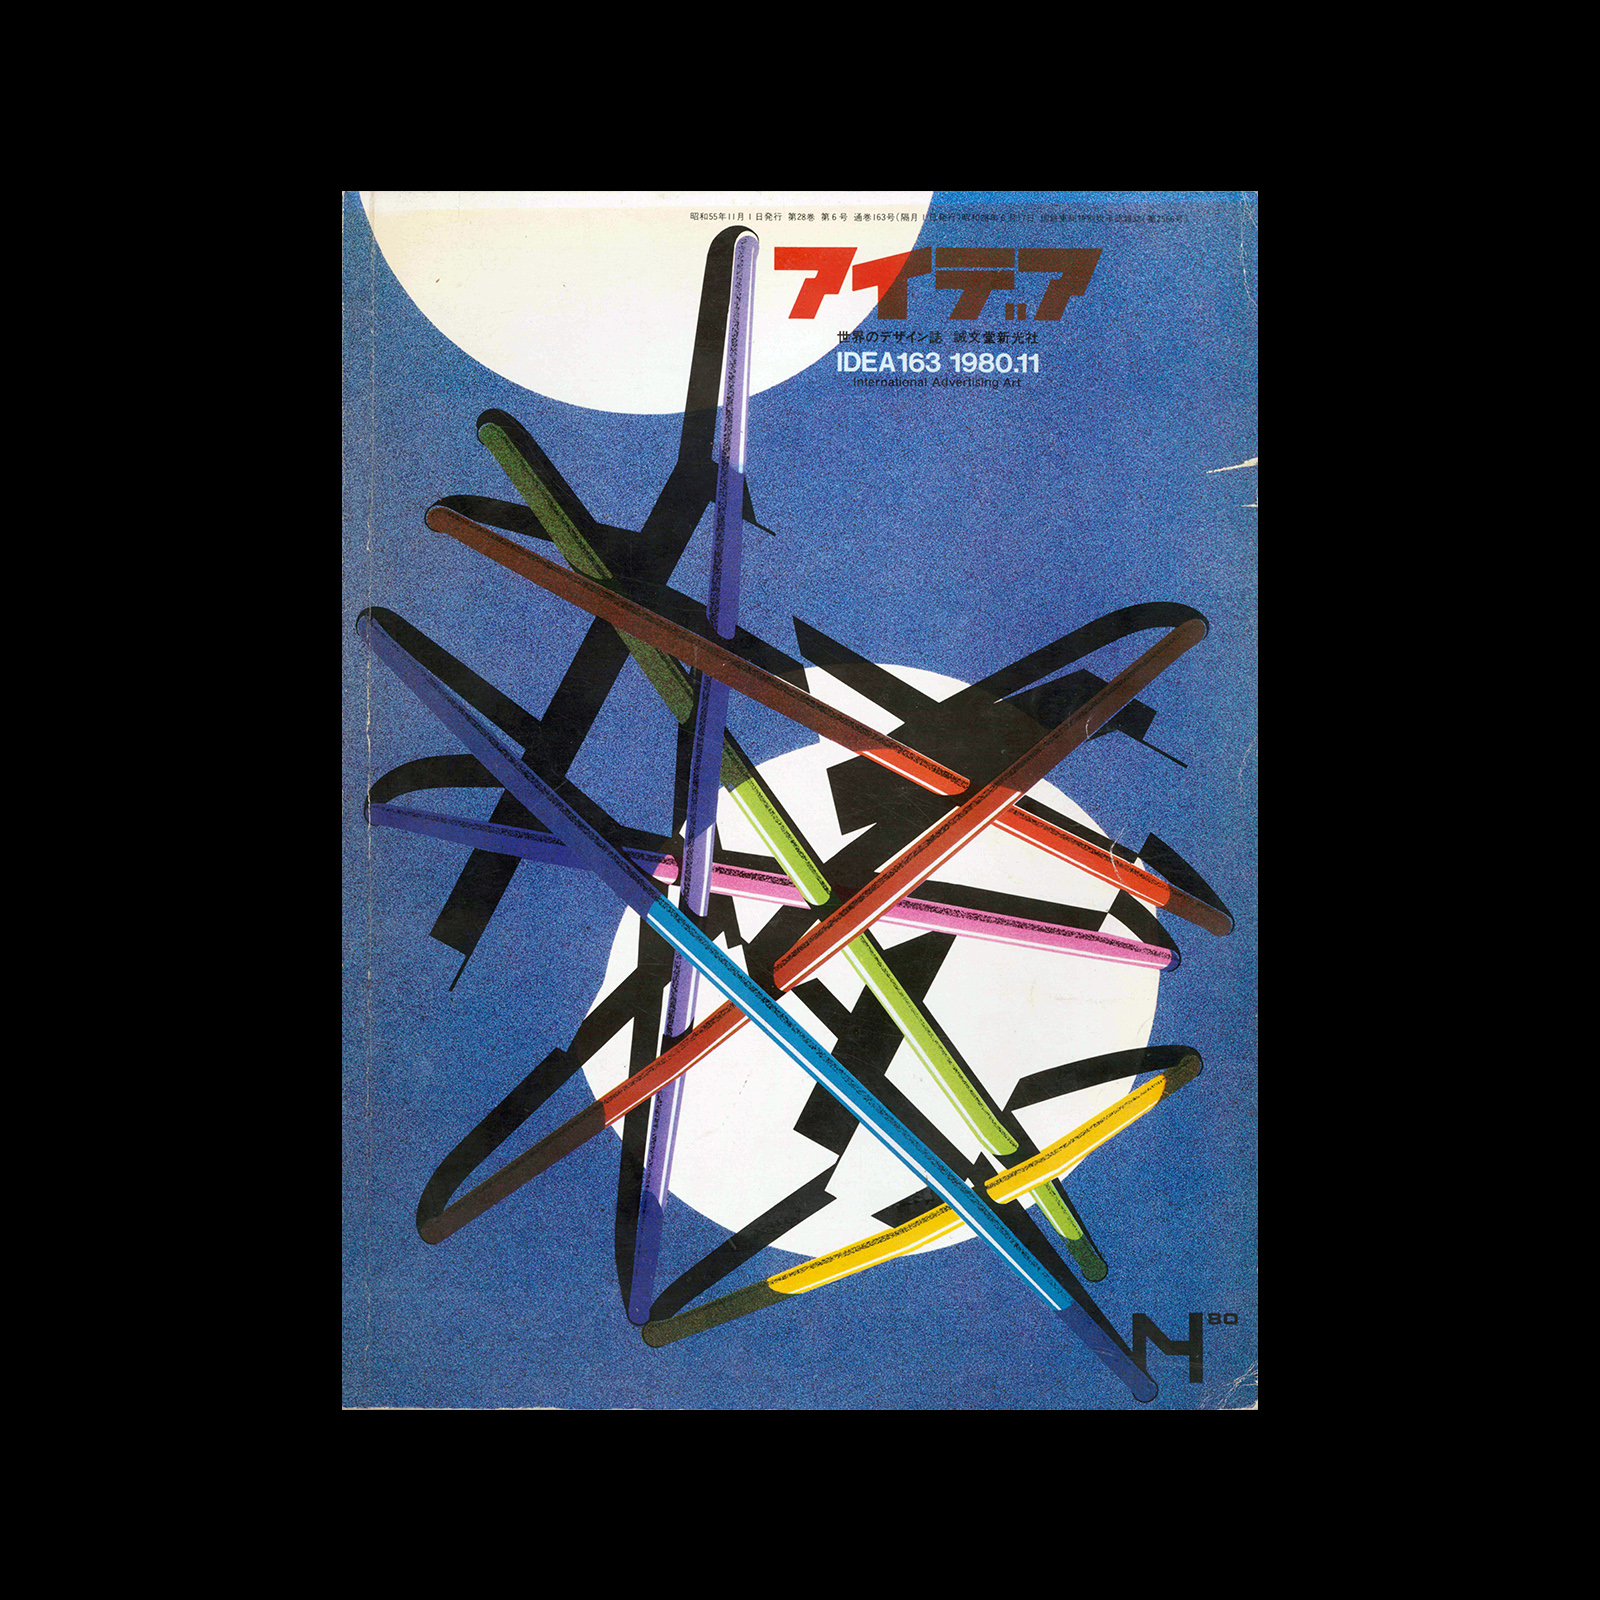 Idea 163, 1980-11. Cover design by Mick Haggerty